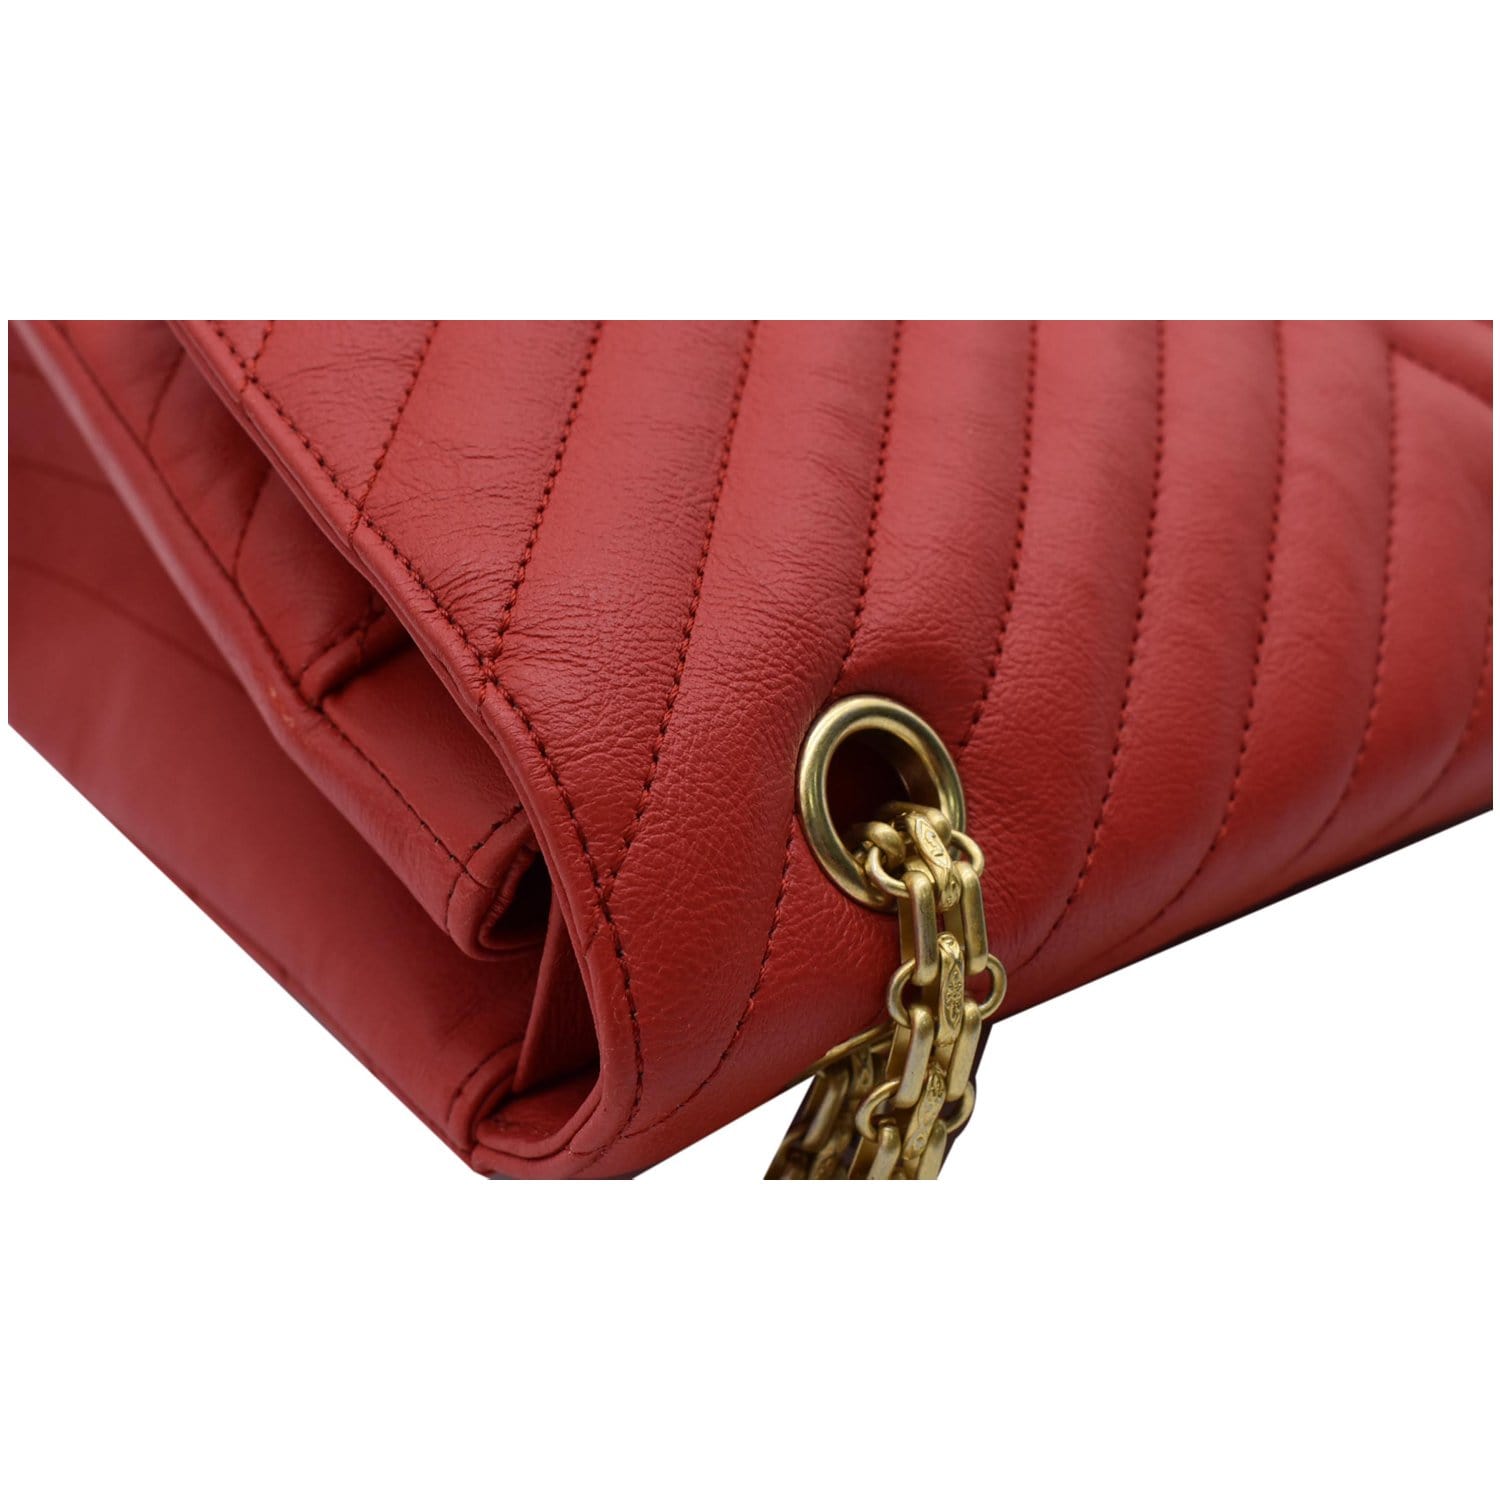 CHANEL 2.55 Reissue Double Flap Chevron Leather Shoulder Bag Red - 20%